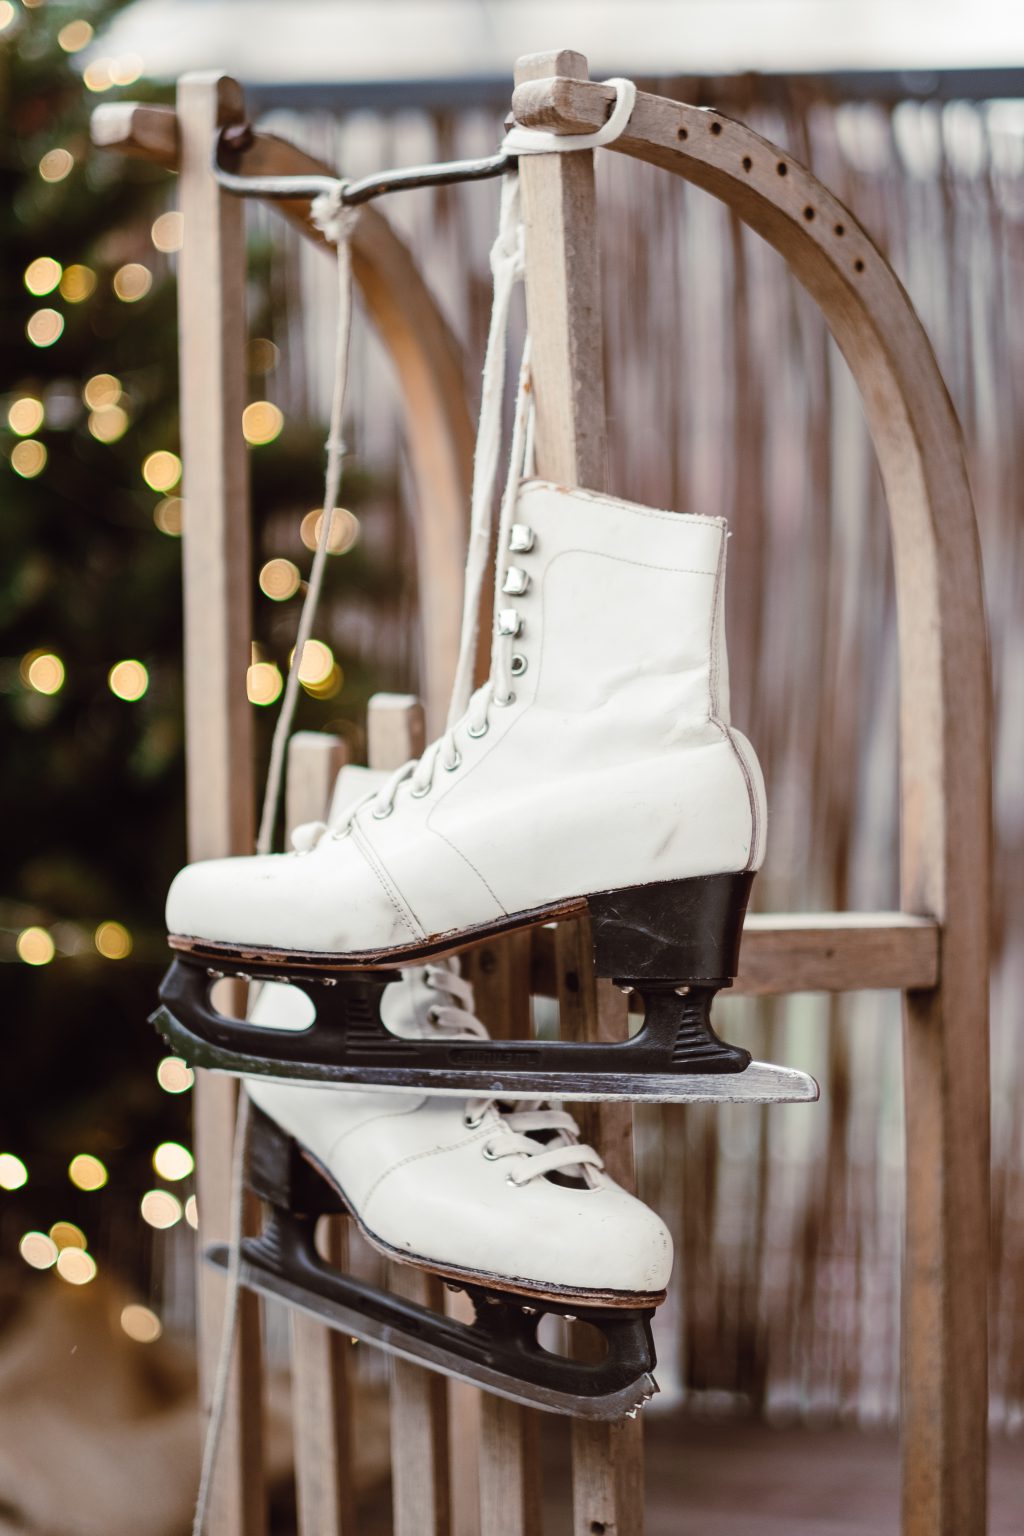 Vintage ice skates on a wooden sled - free stock photo